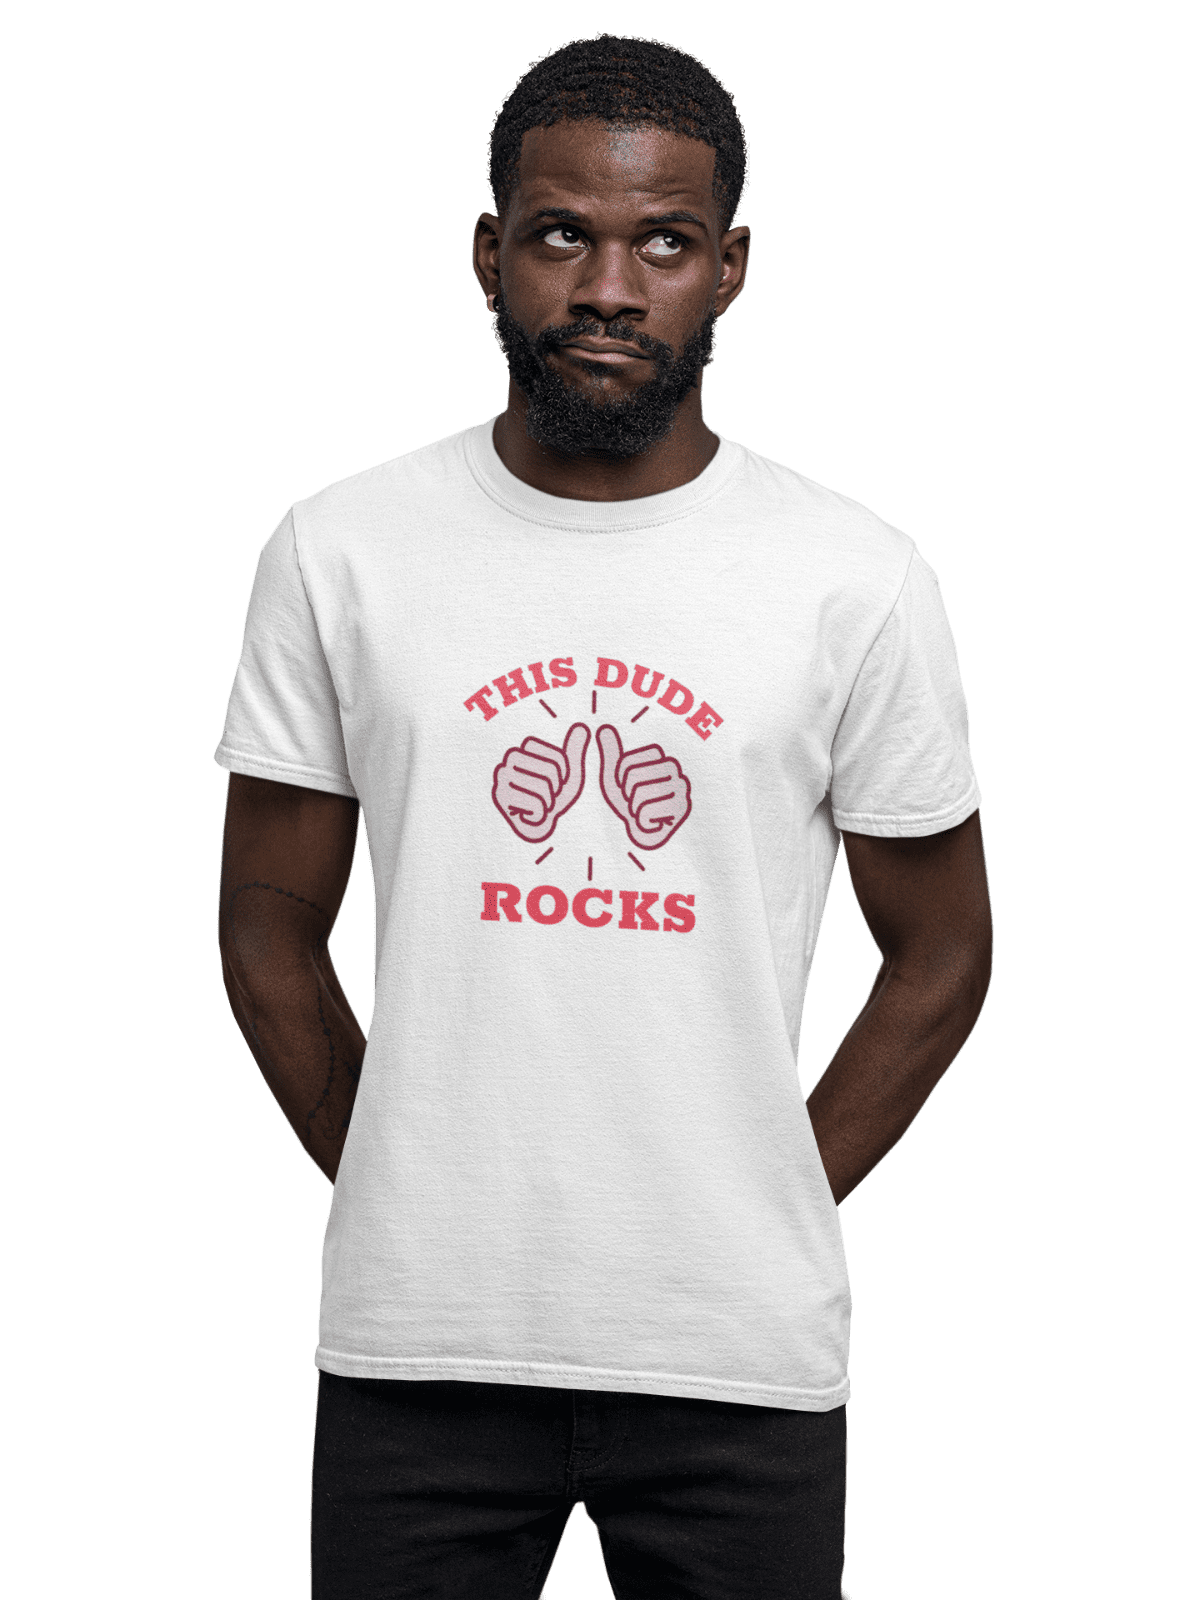 The Rock Meme T-Shirt plain T-Shirt short oversized t shirt Short t-shirt  clothes for men